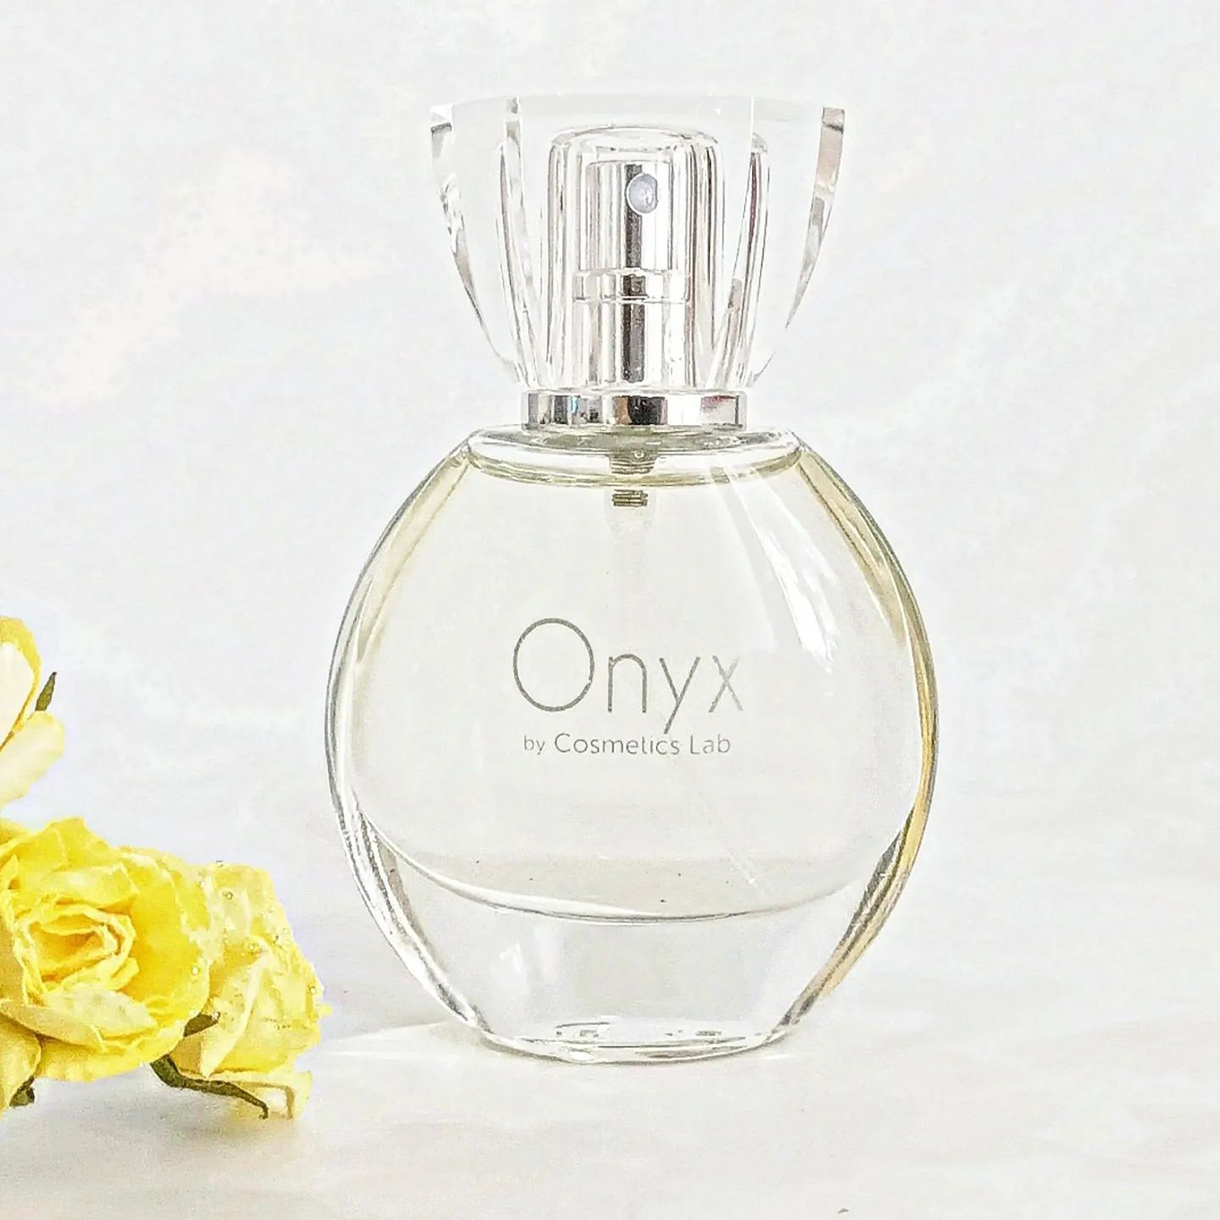 Prelep miris Onyx parfema